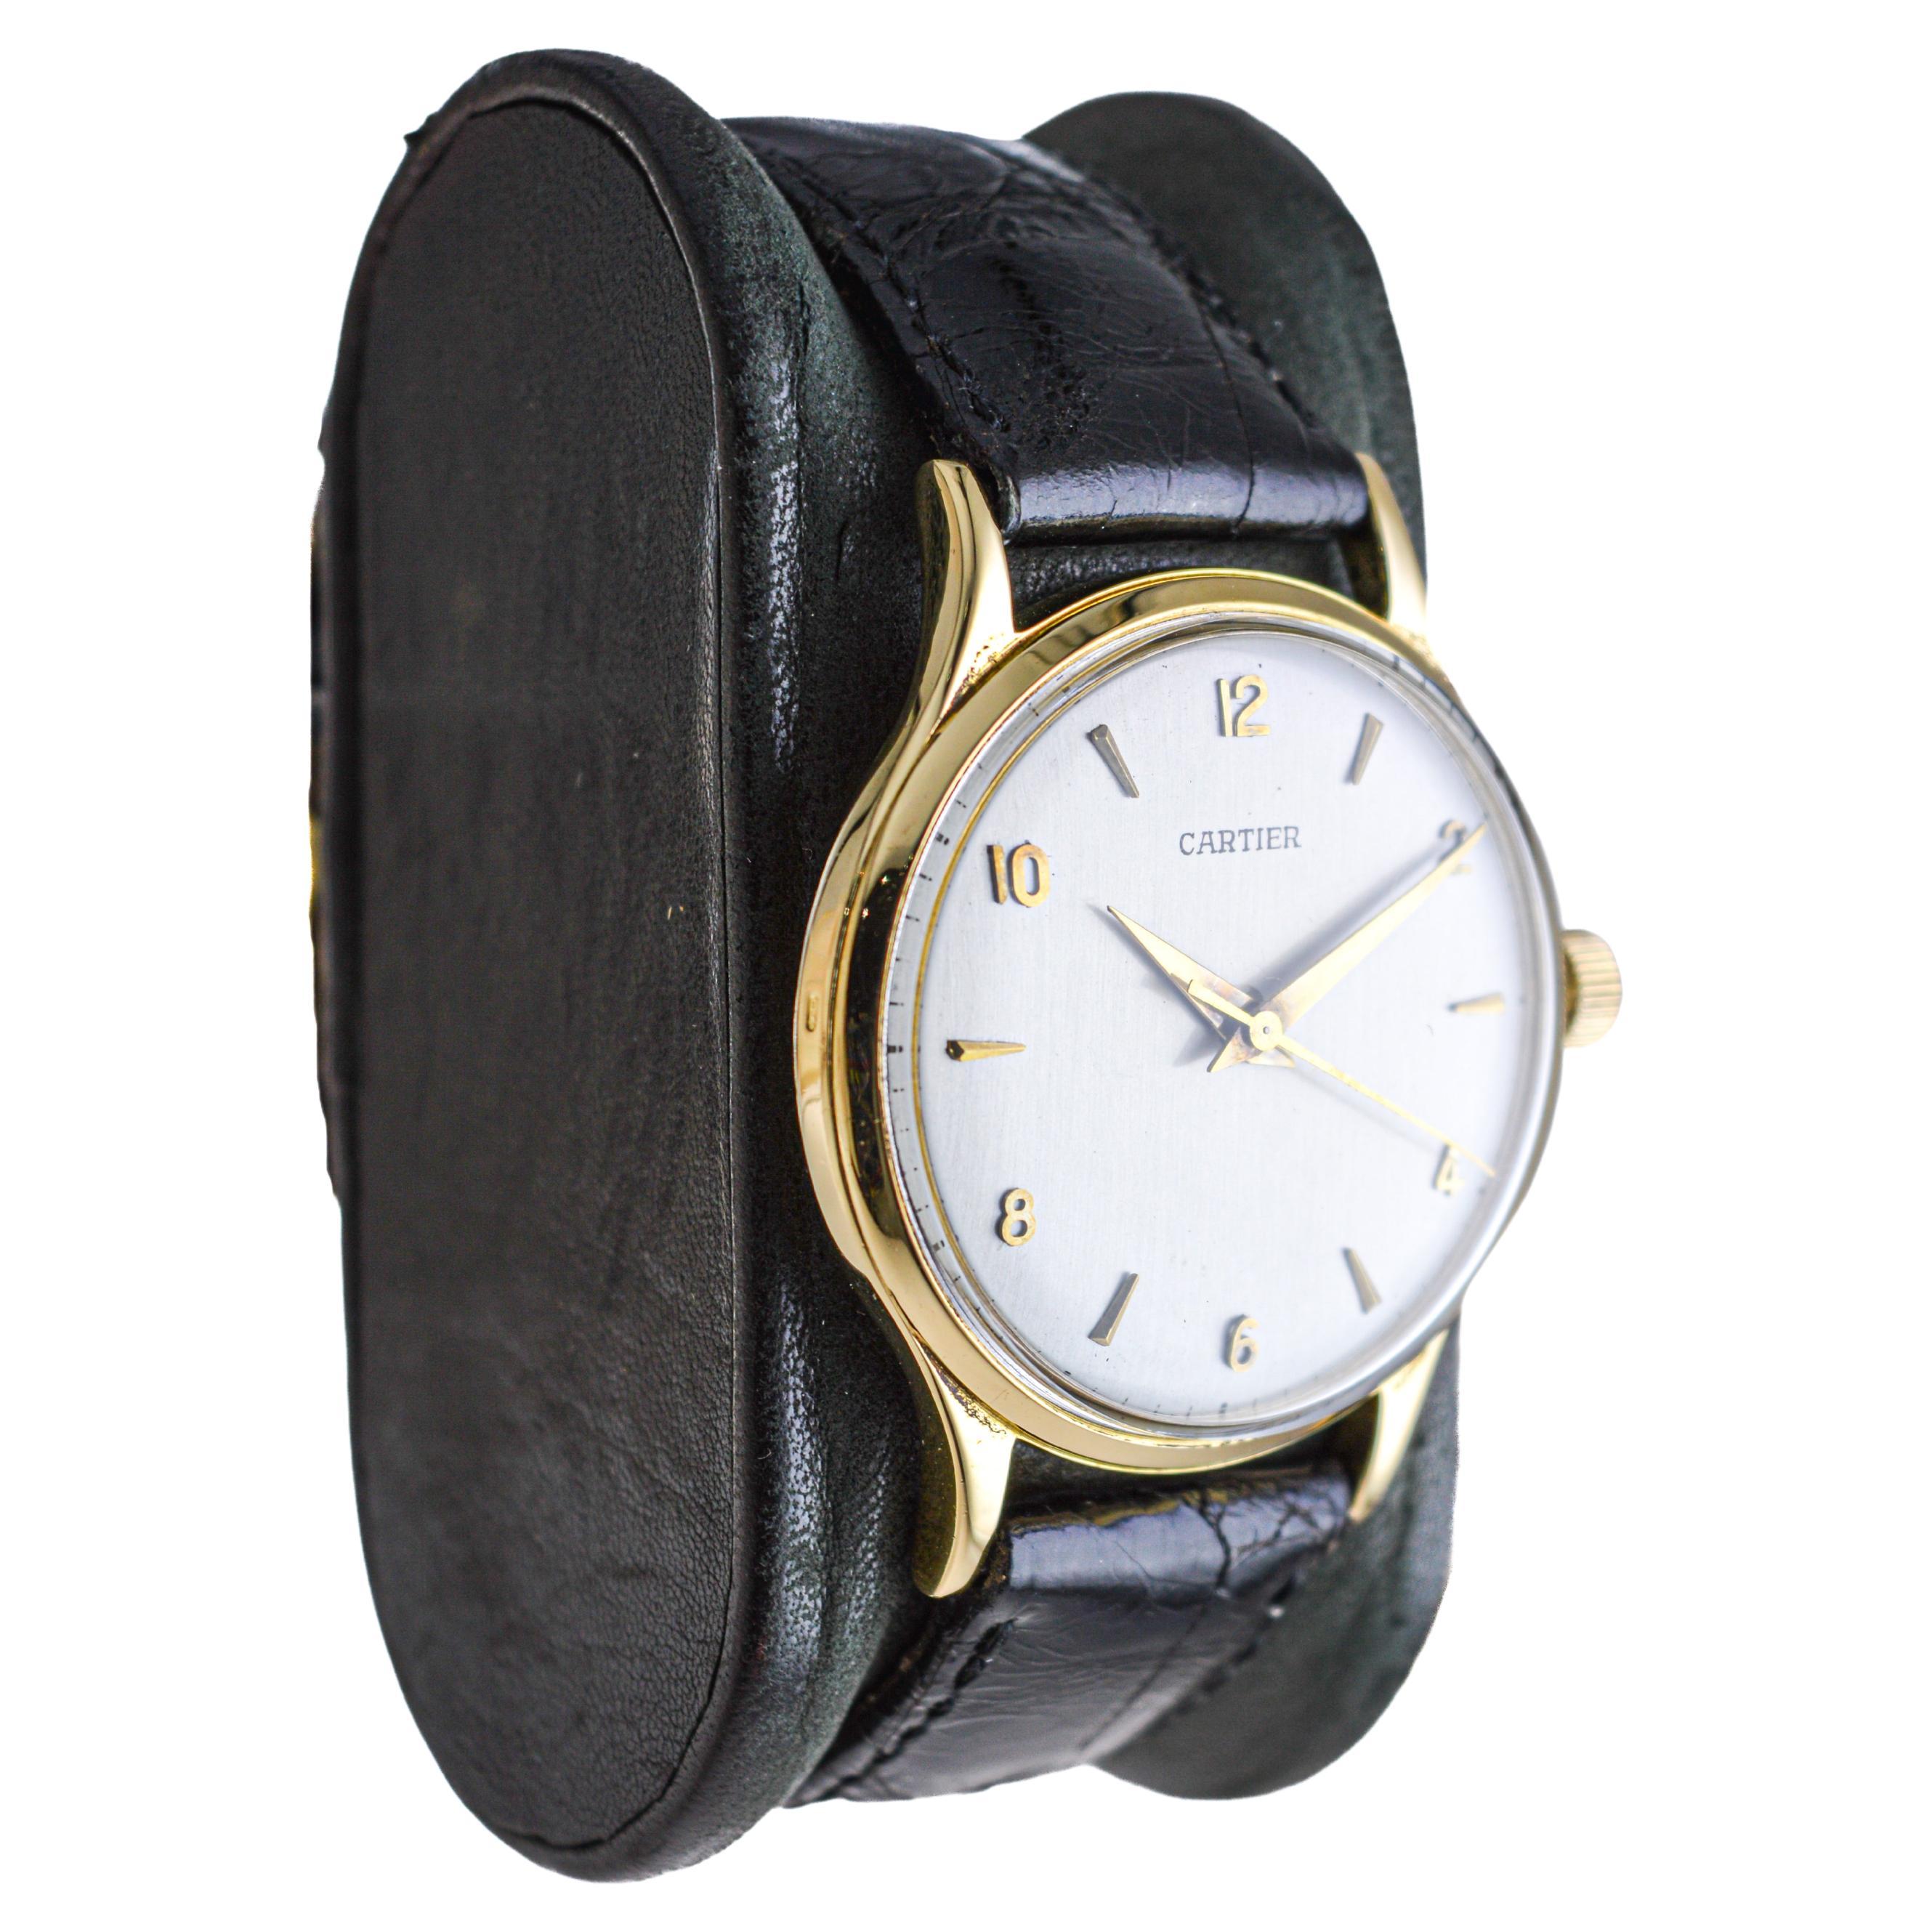 Cartier Paris 18Kt. Gold Calatrava Style Watch, from 1950's European Watch Co.  For Sale 2